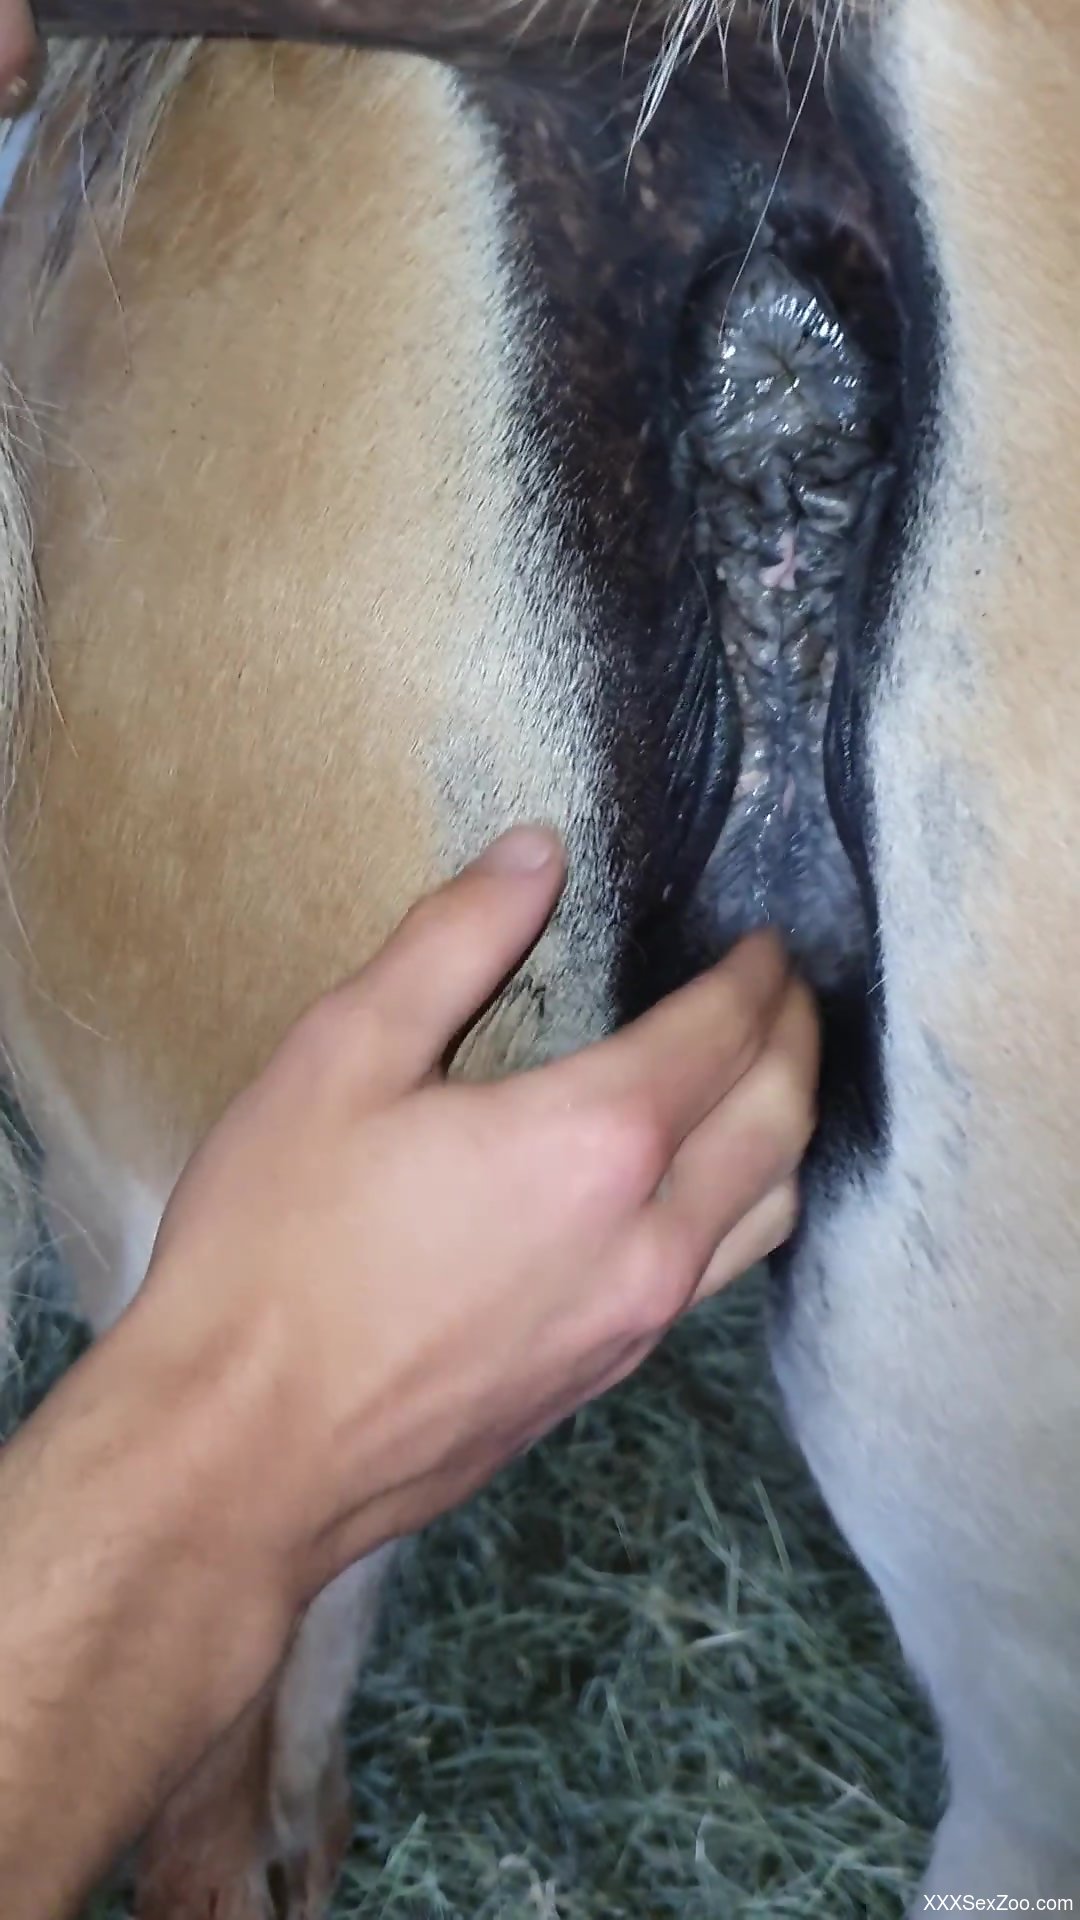 Horse Fucking Horse Porn - Horny guy finger fucks his female horse in harsh modes - XXXSexZoo.com